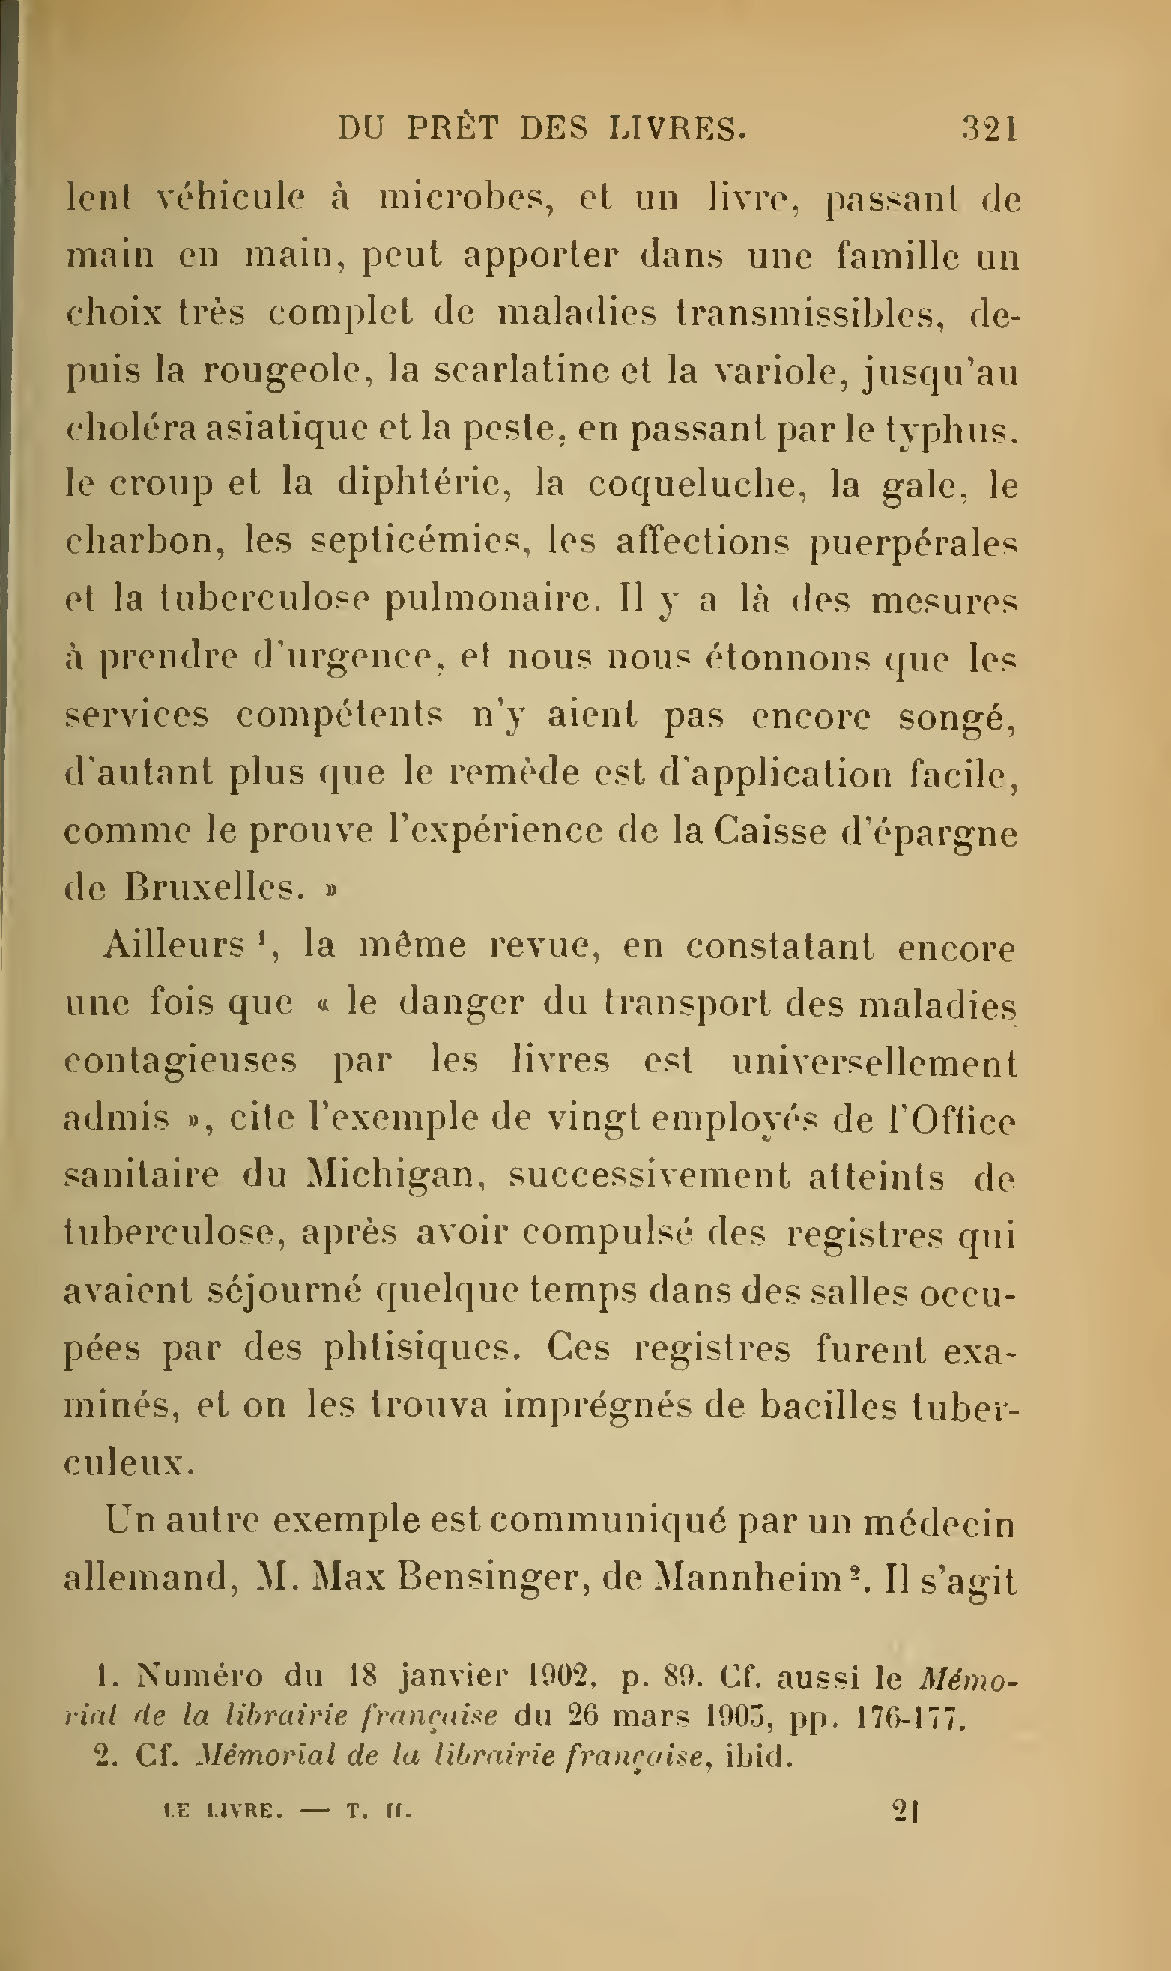 Albert Cim, Le Livre, t. II, p. 321.